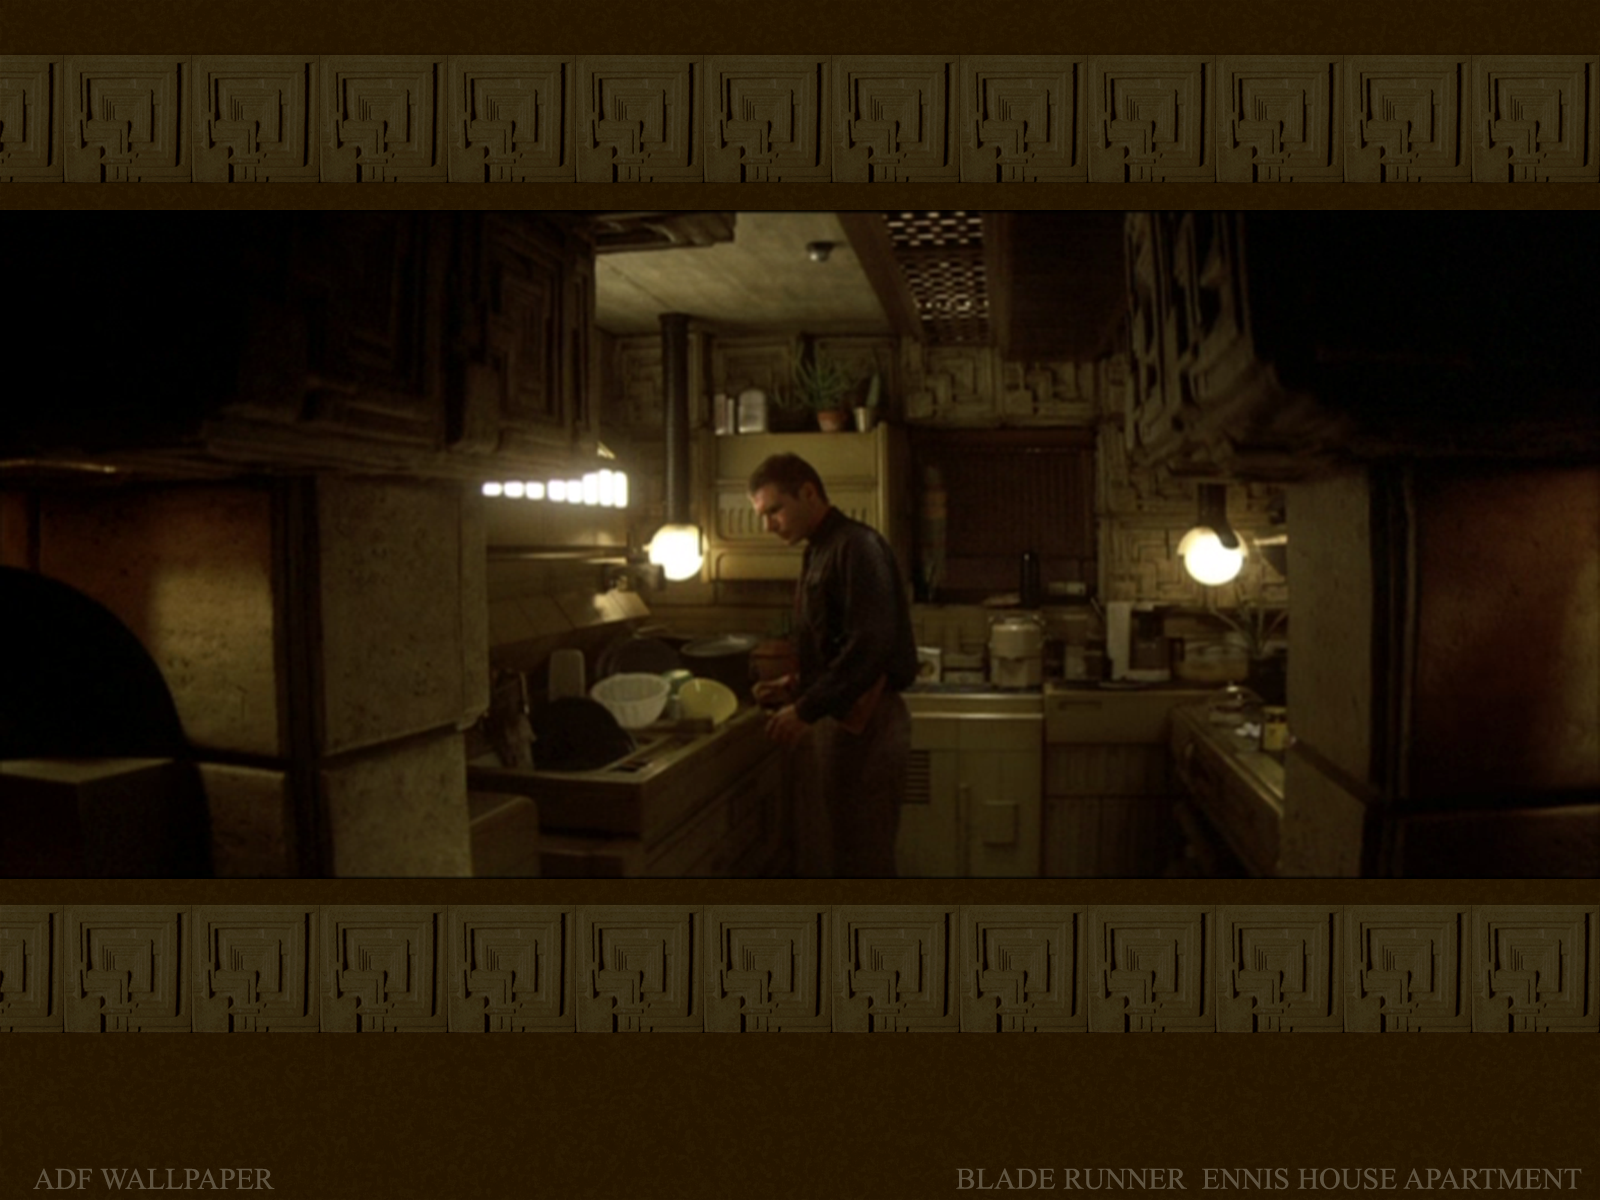  of Deckard's apartment in the classic Ridley Scott film Blade Runner.